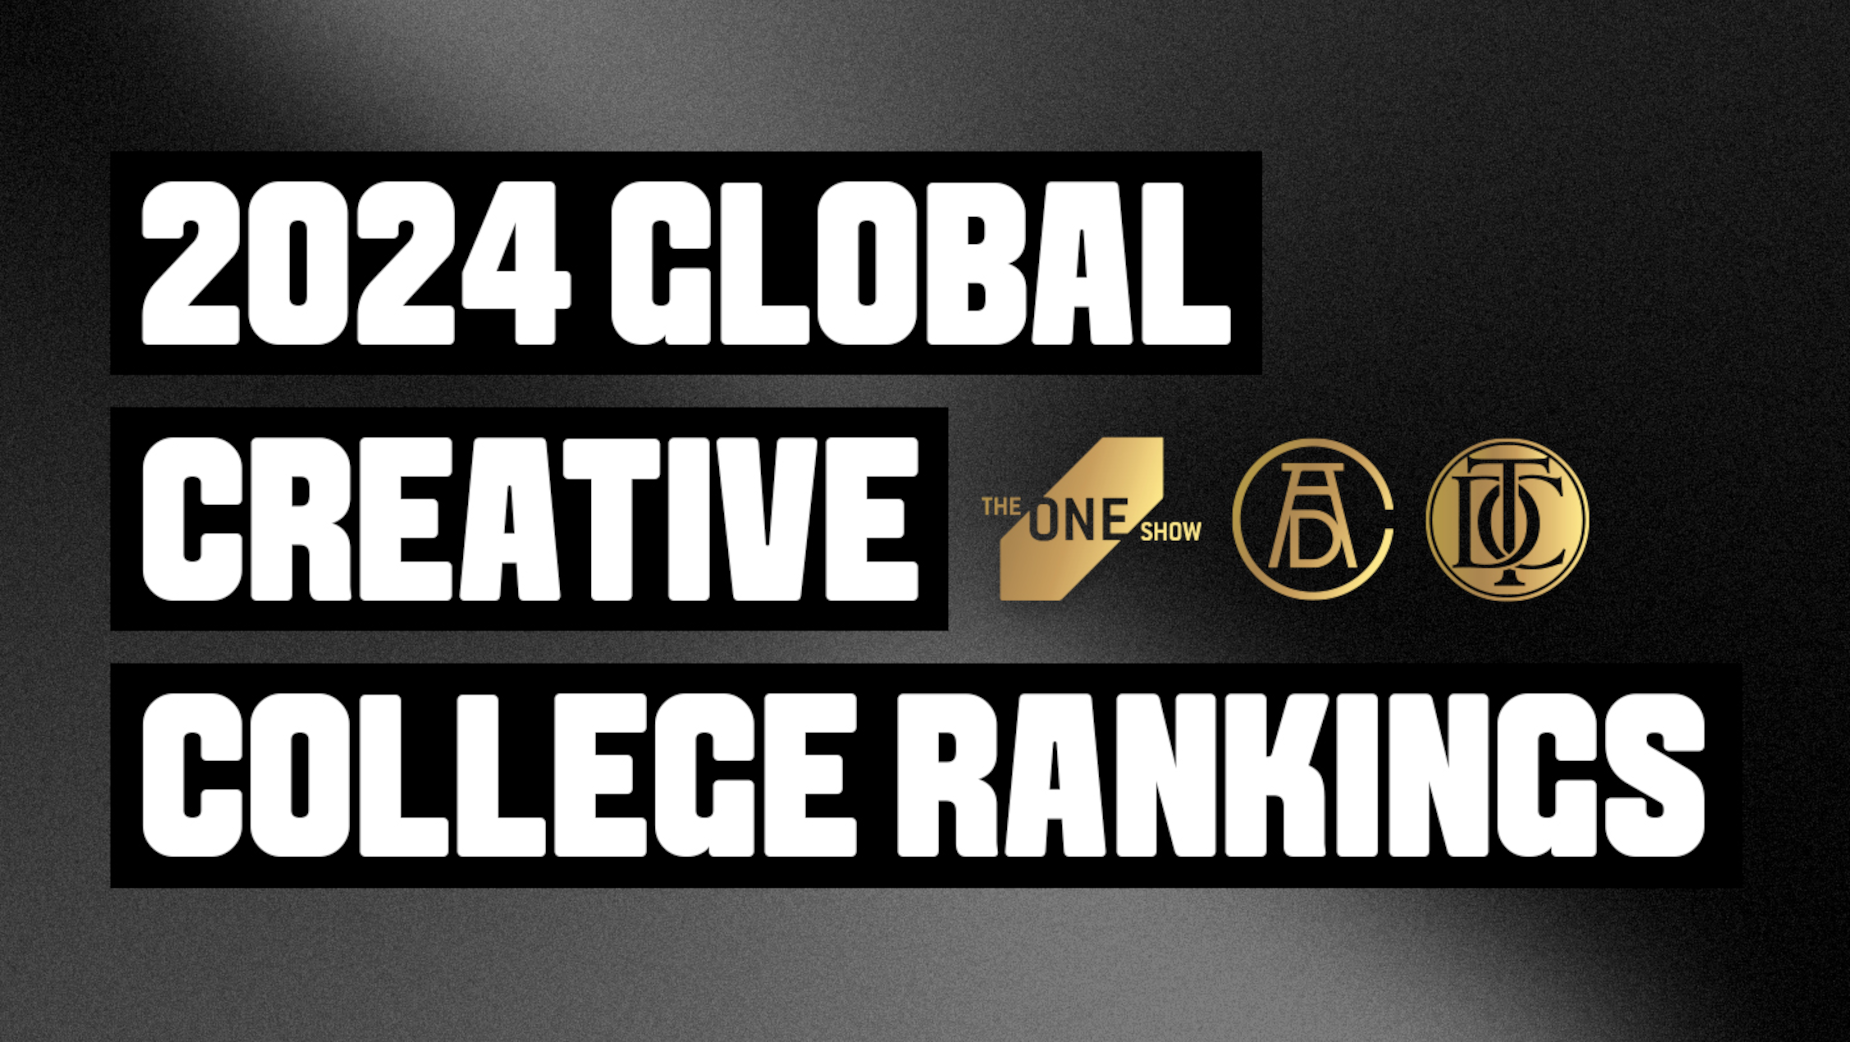 The One Club announces 2024 global creative college rankings